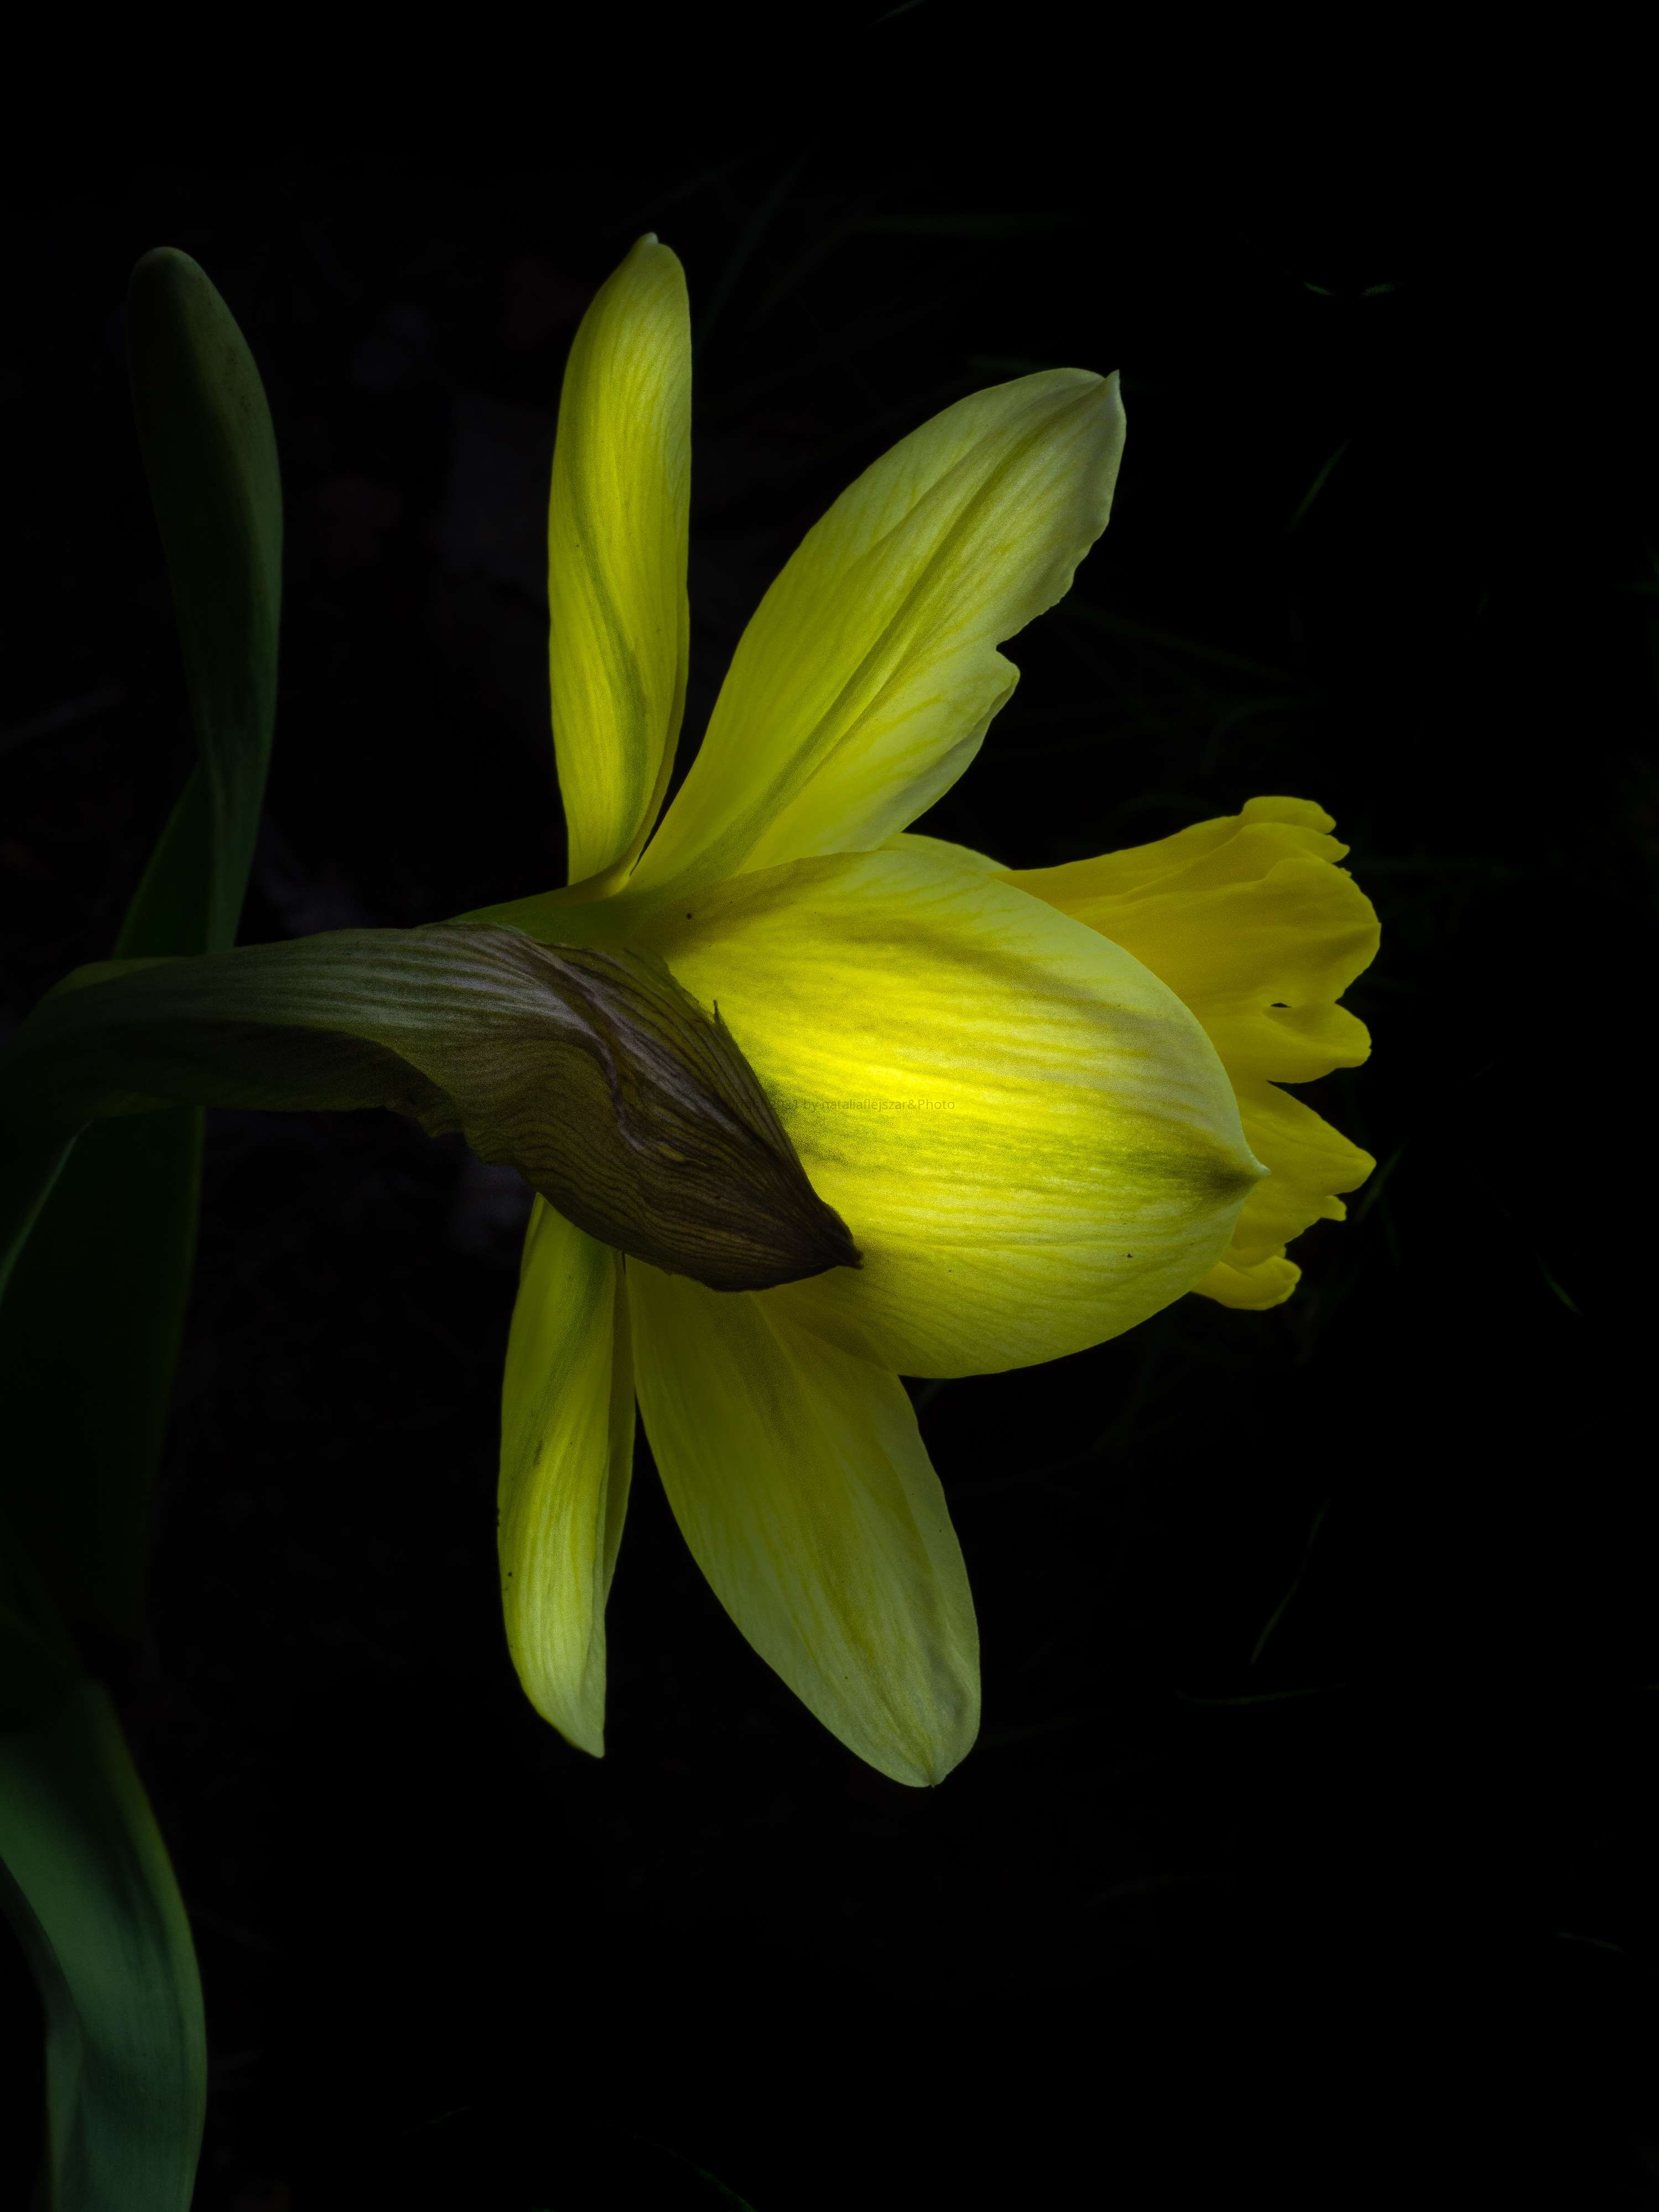 18.5.2020.ISO200. f16.1.100s. 600mm Olympus omd em10markIII. spring,may, flower-5180274-2.jpg